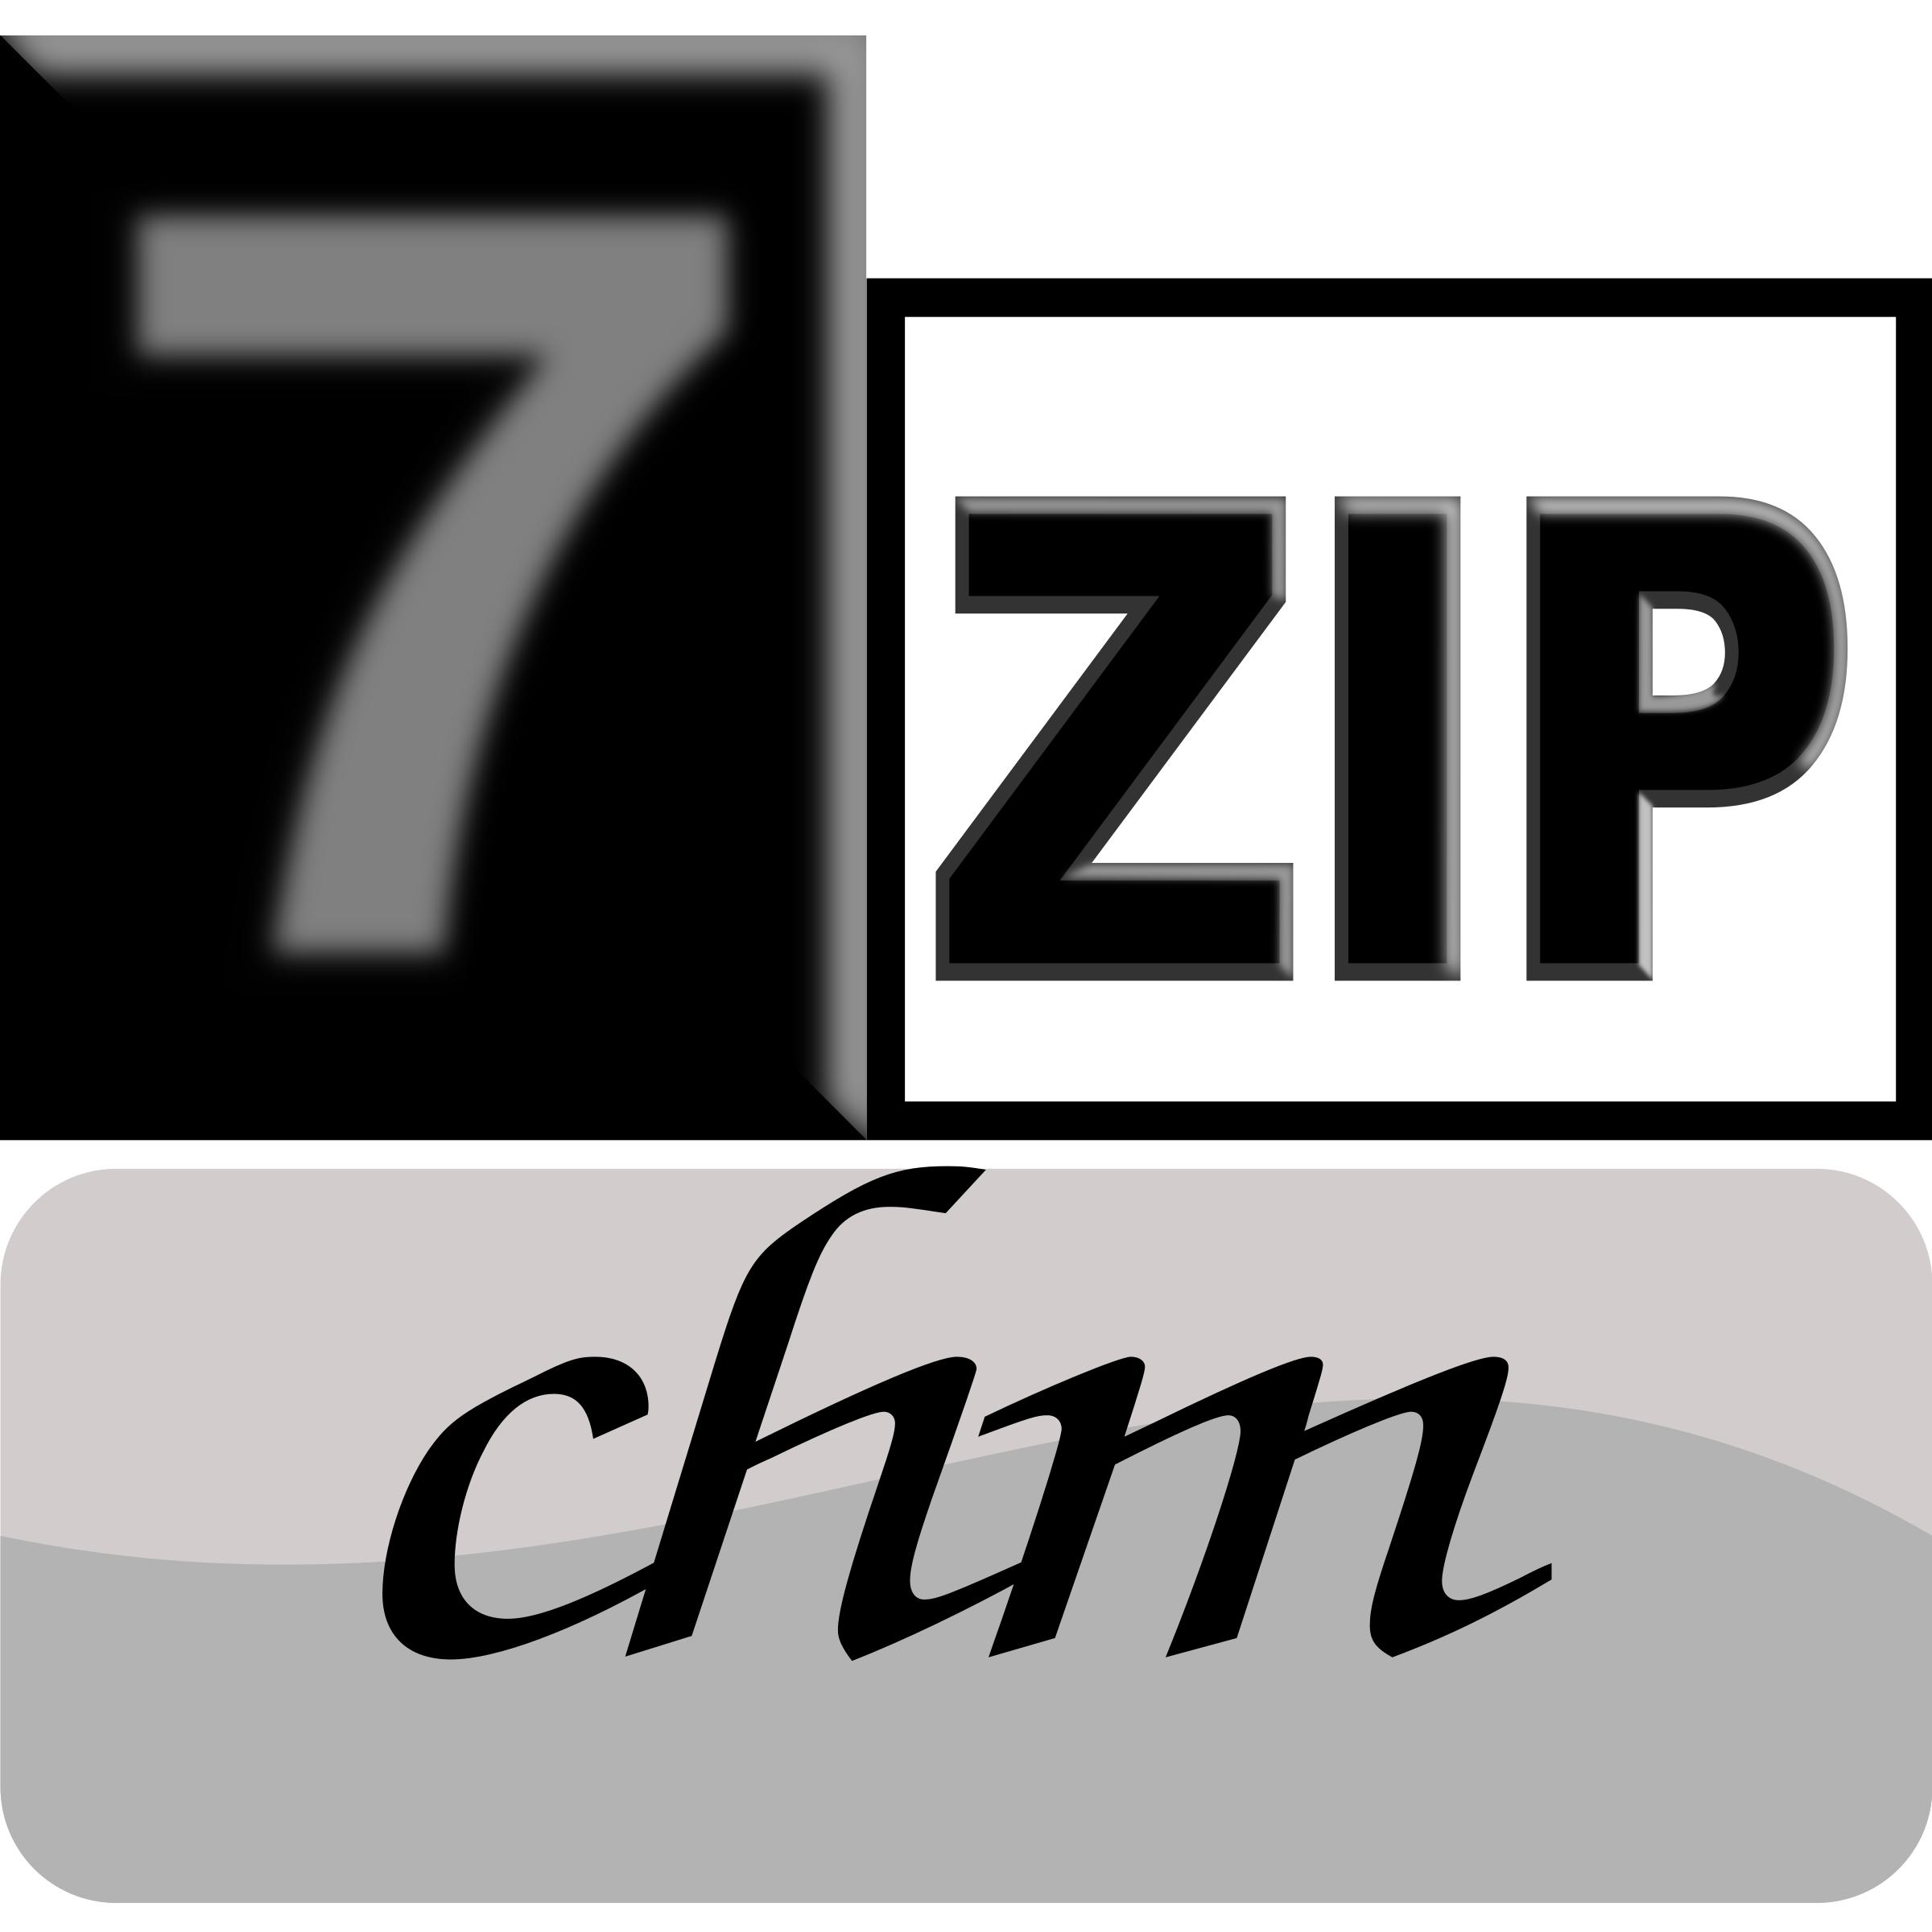 7zipClassic-chm png